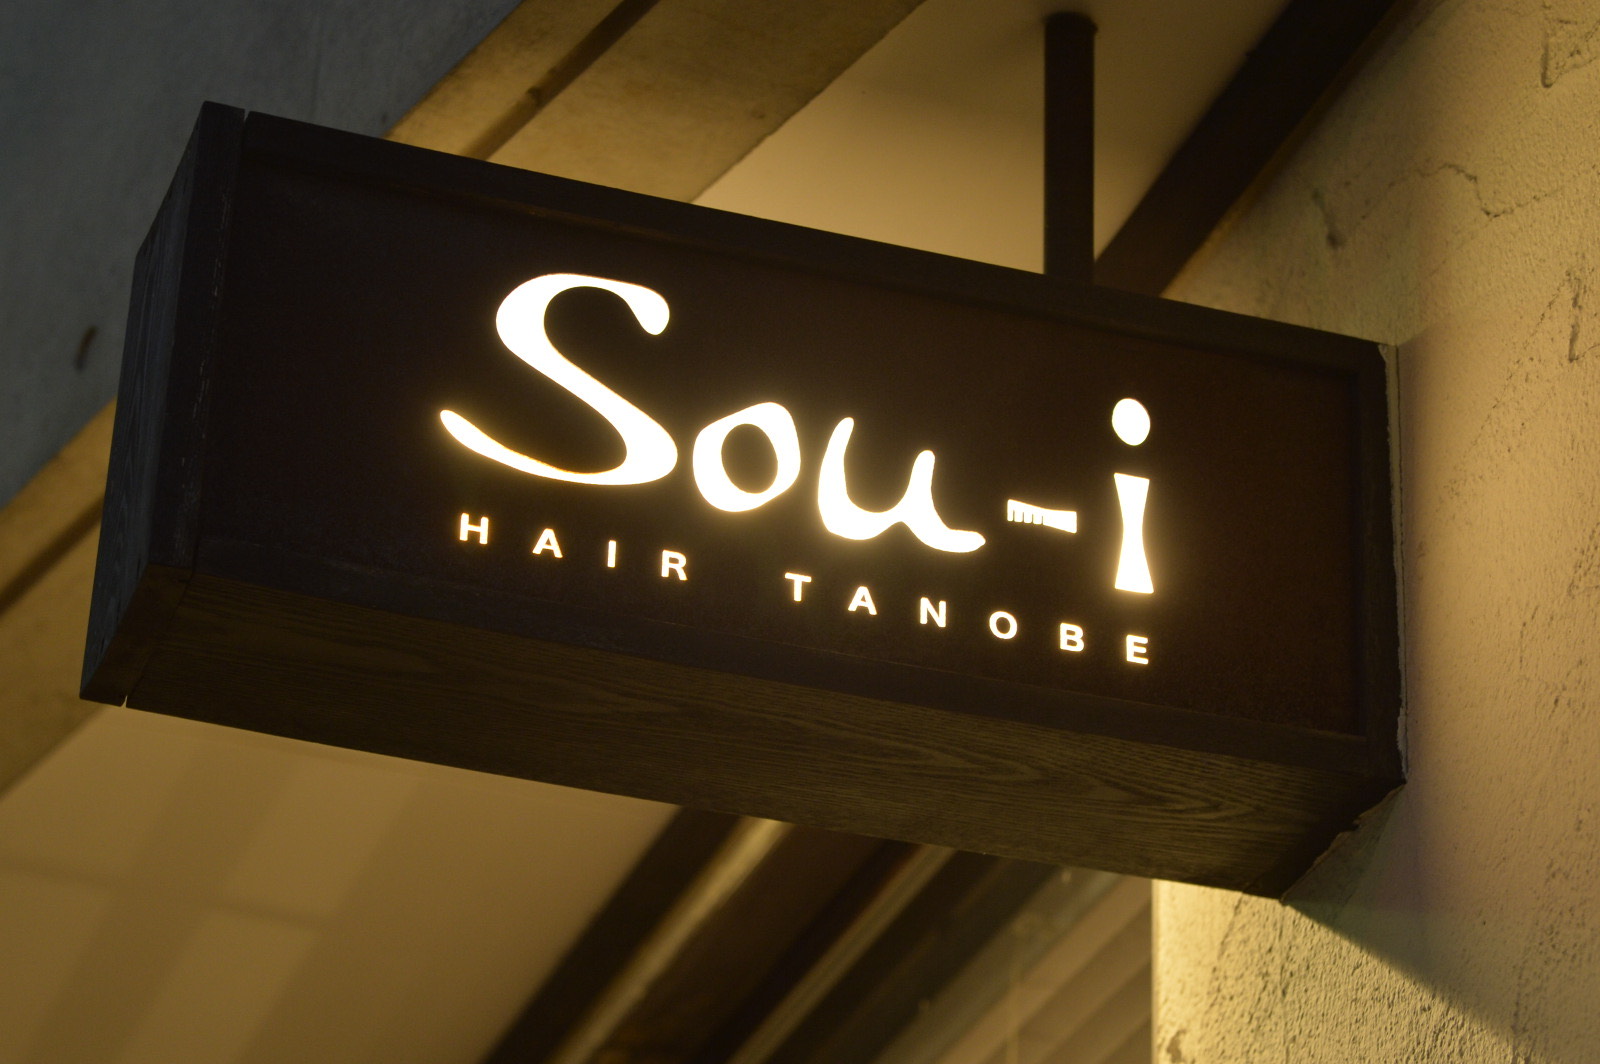 Images Sou-i hair川崎店